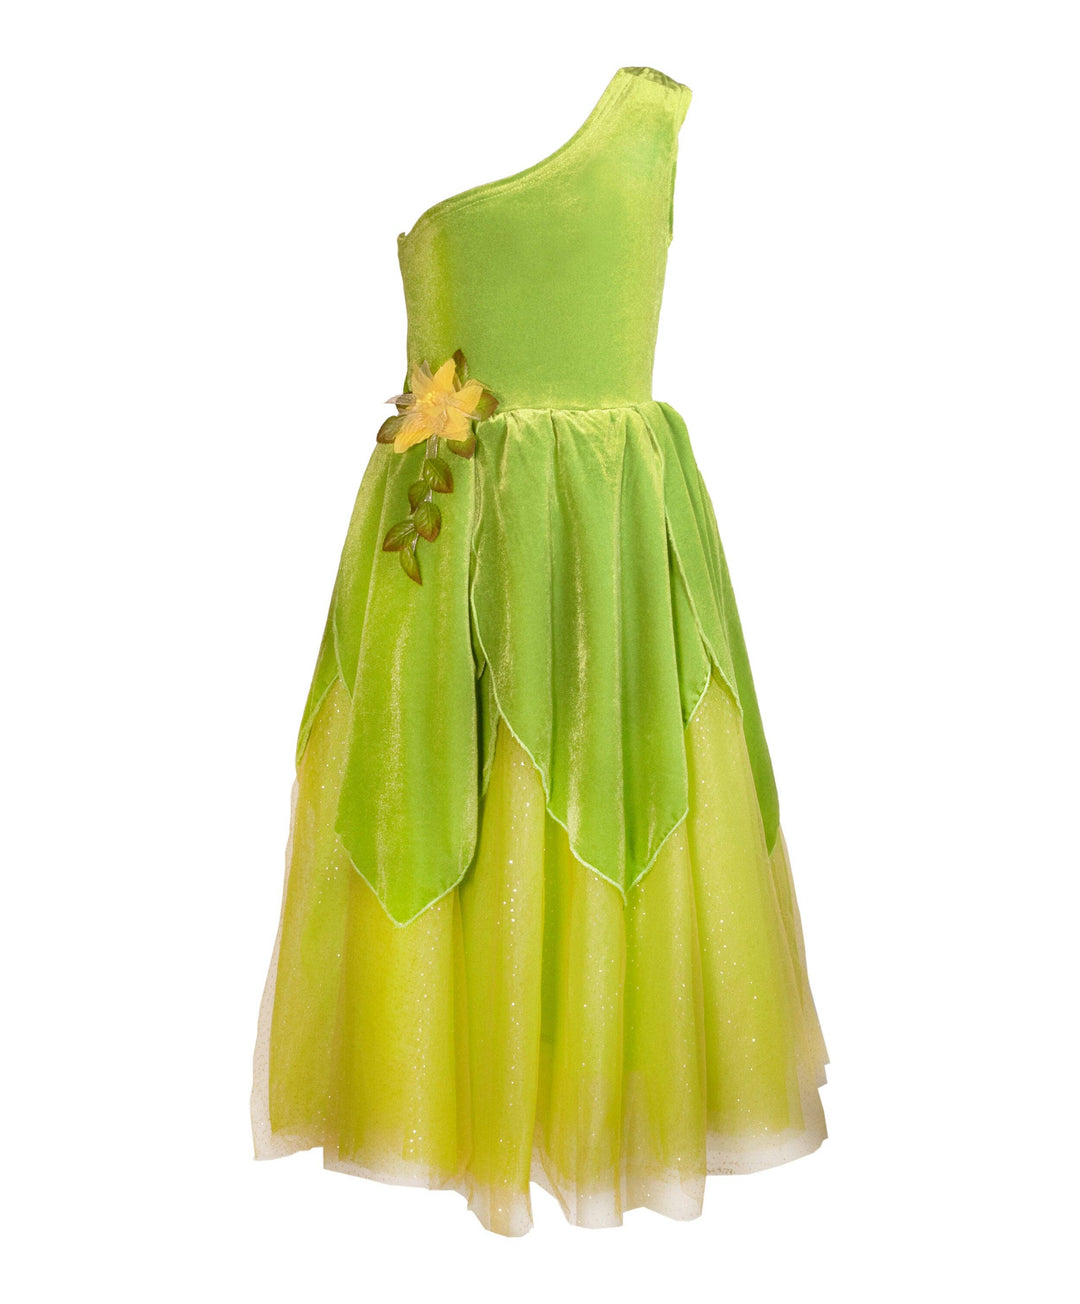 Tinker Fairy  dress